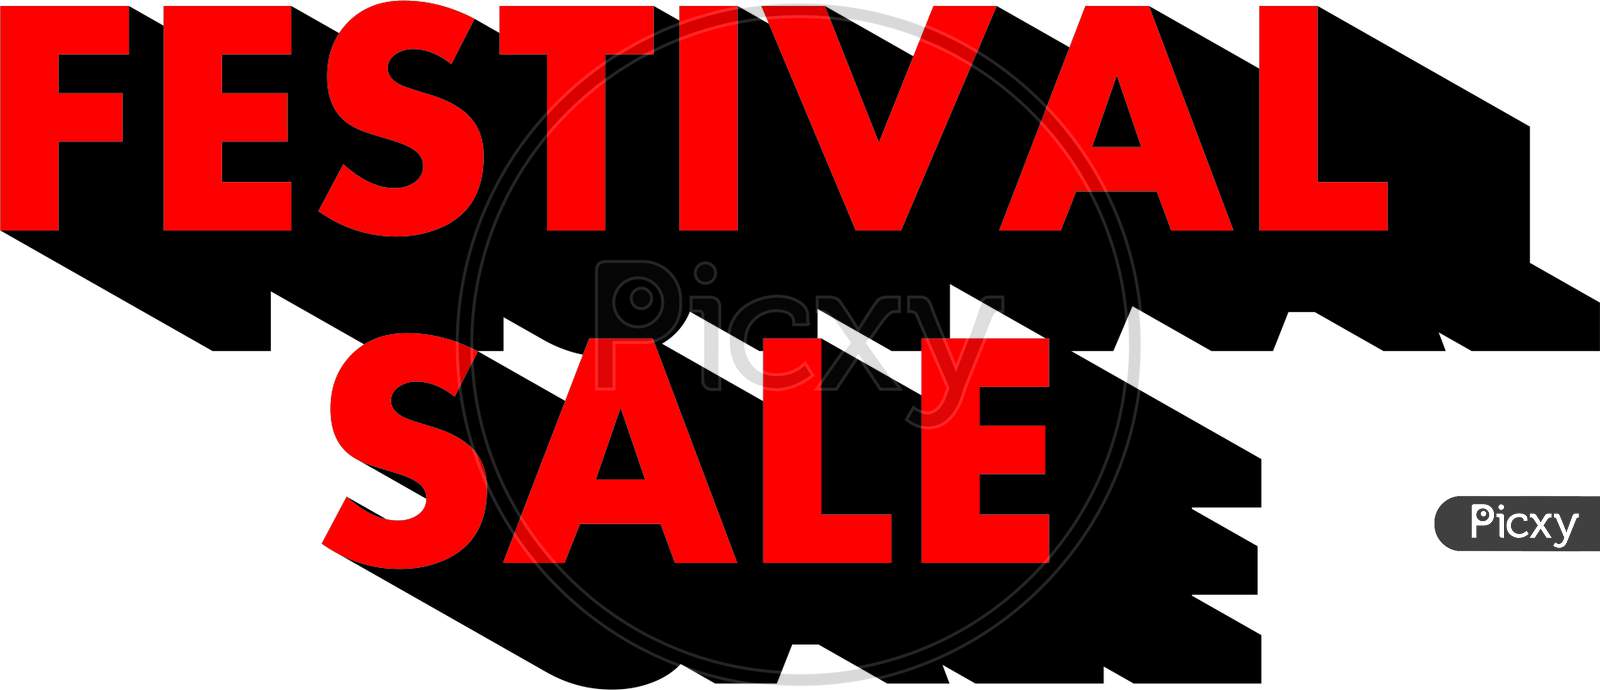 Festival Sale SHADOW TEXT